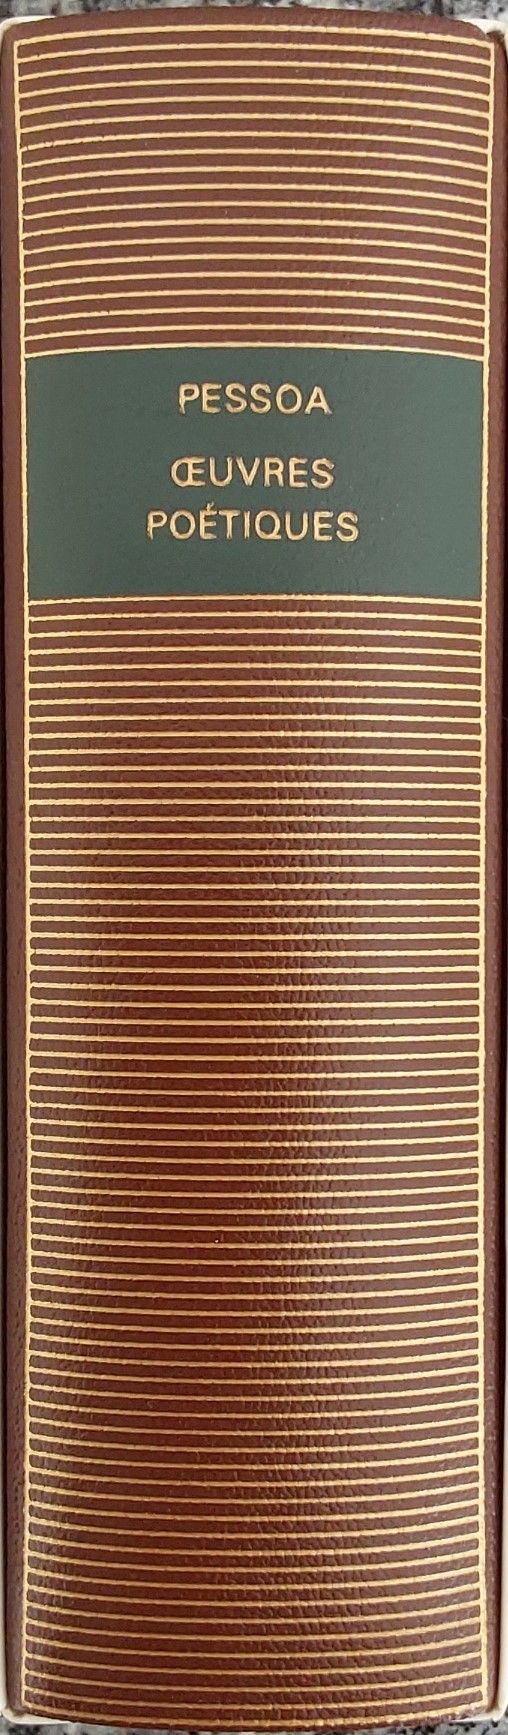 Volume 482 de Pessoa dans la Bibliothèque de la Pléiade.